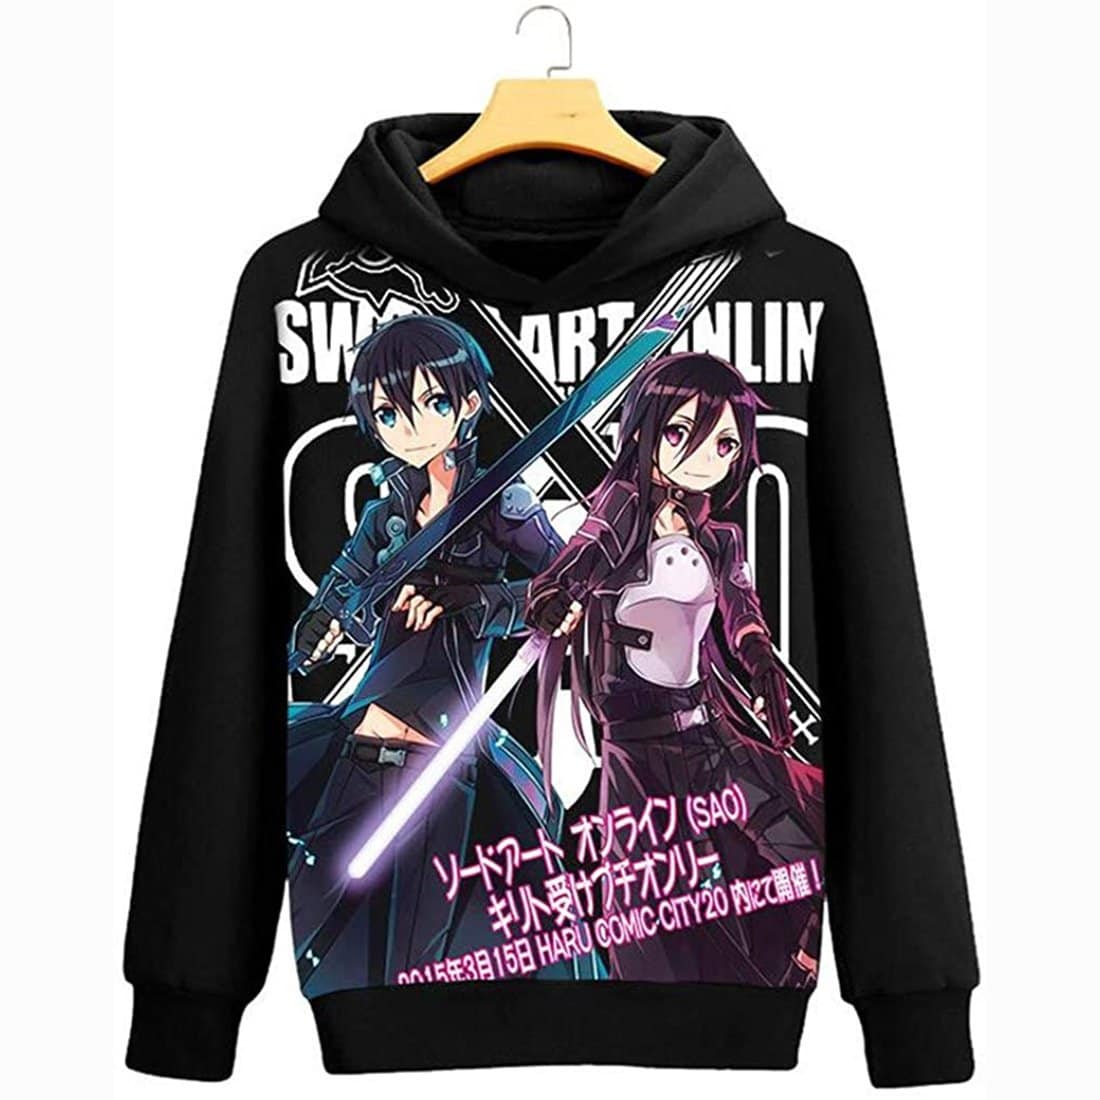 Anime Sword Art Online SAO Cosplay Jacket Sweatshirt Fleeces Costume Hoodie